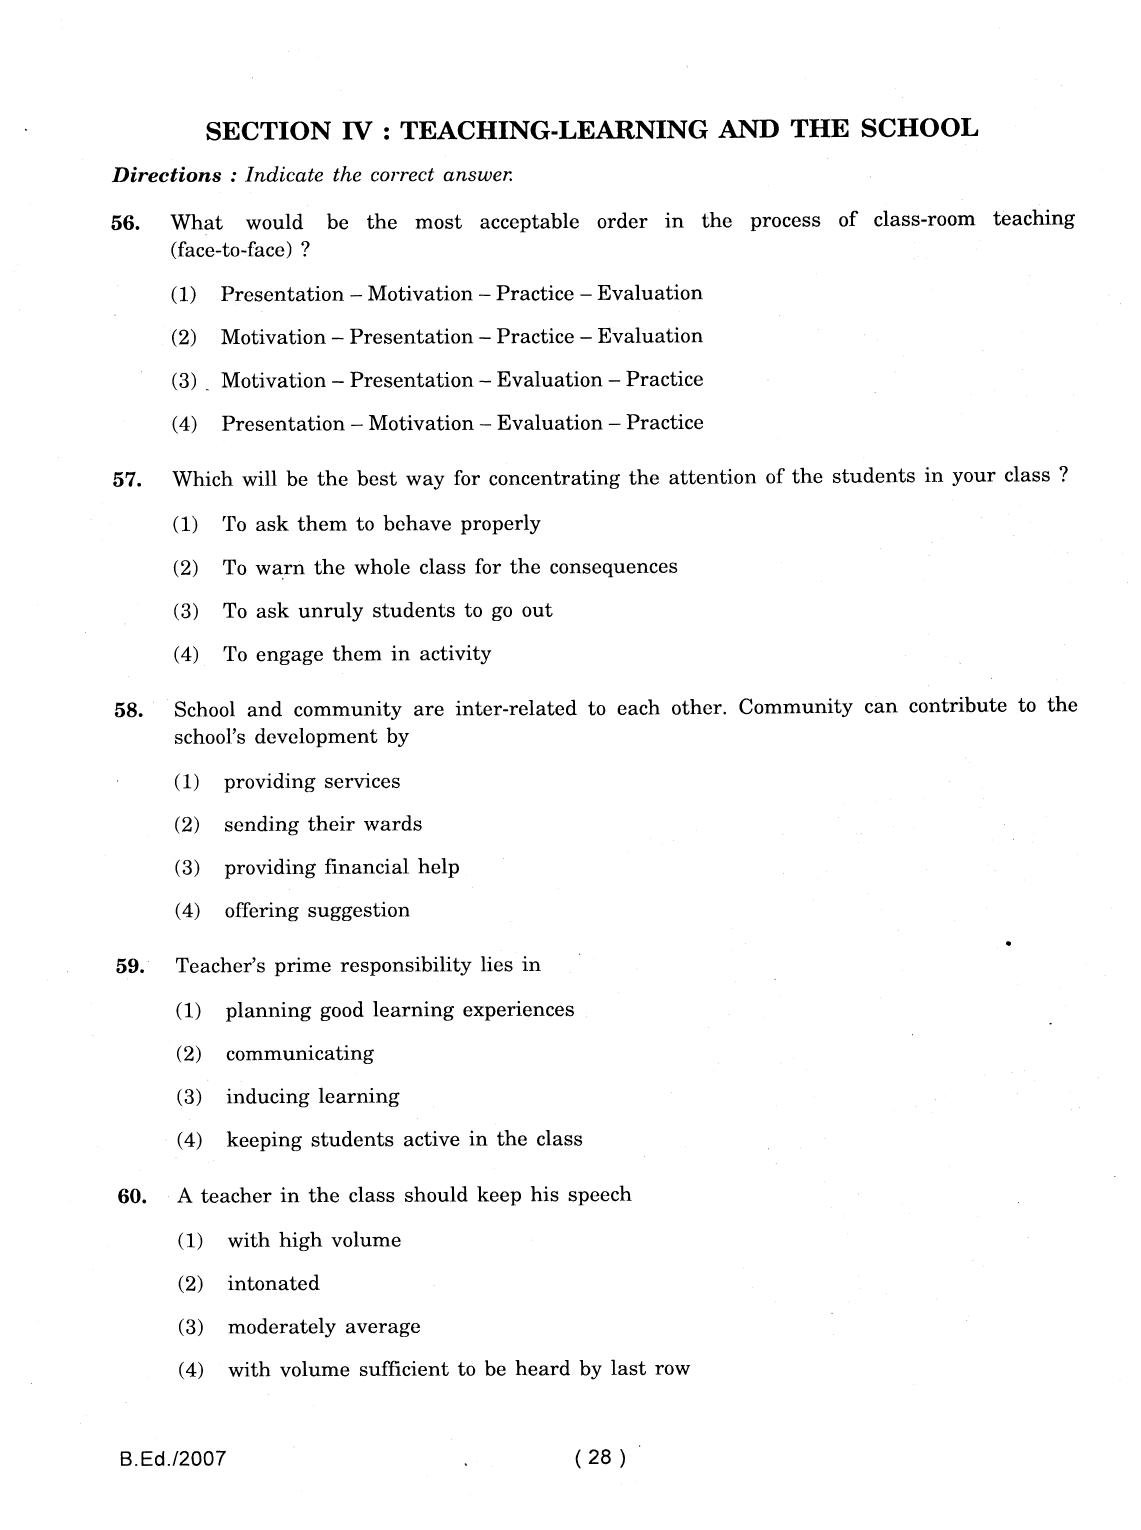 IGNOU B.Ed 2007 Question Paper - Page 28